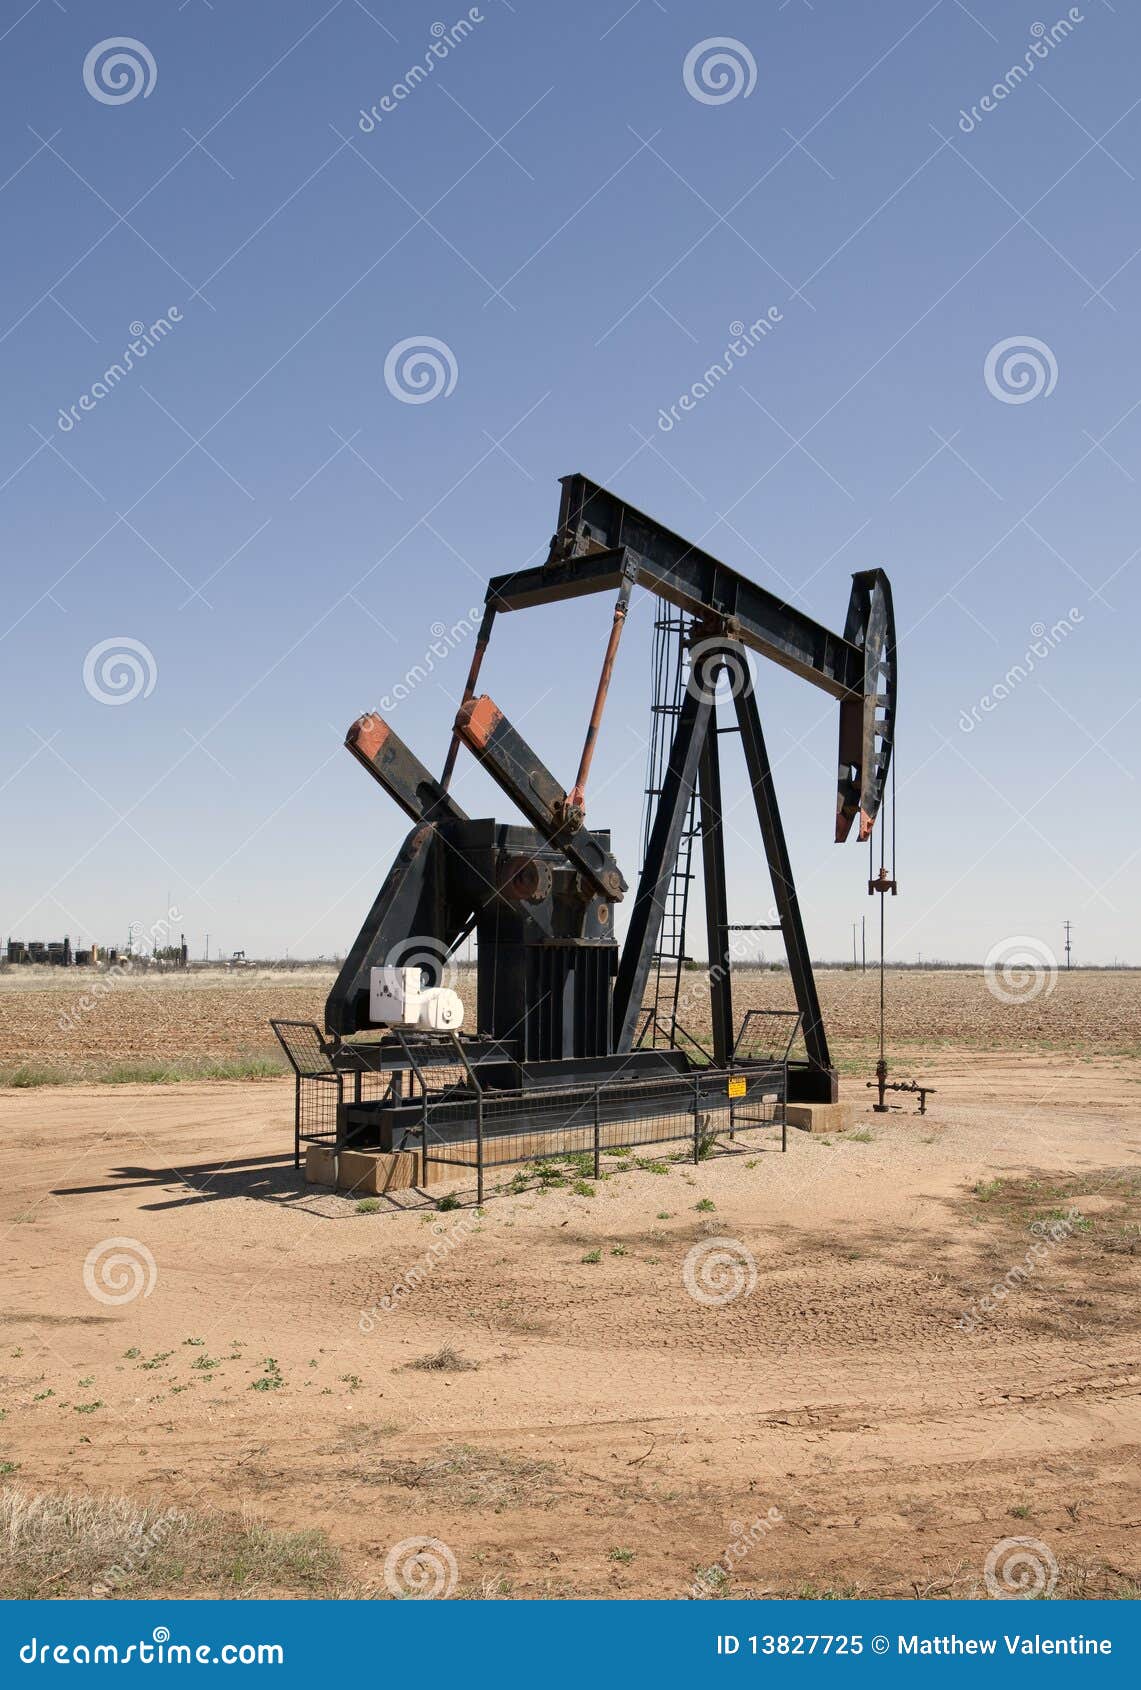 Texas-Schmieröl-Pumpe stockbild. Bild von erdöl, pumpe - 13827725